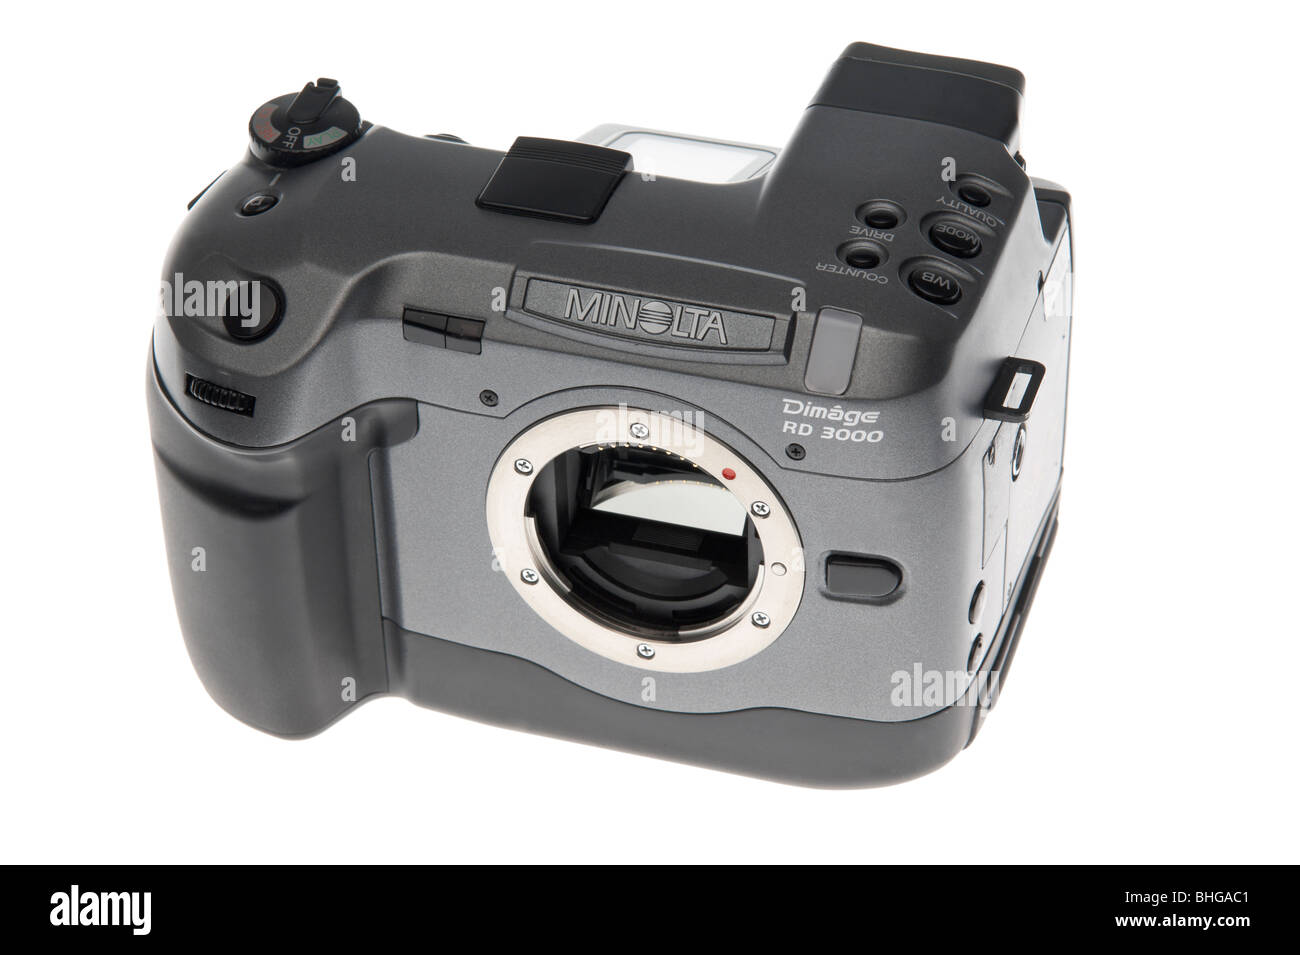 Minolta RD3000 - 1999 vintage DSLR camera system, pioneering early semi-pro concept Stock Photo